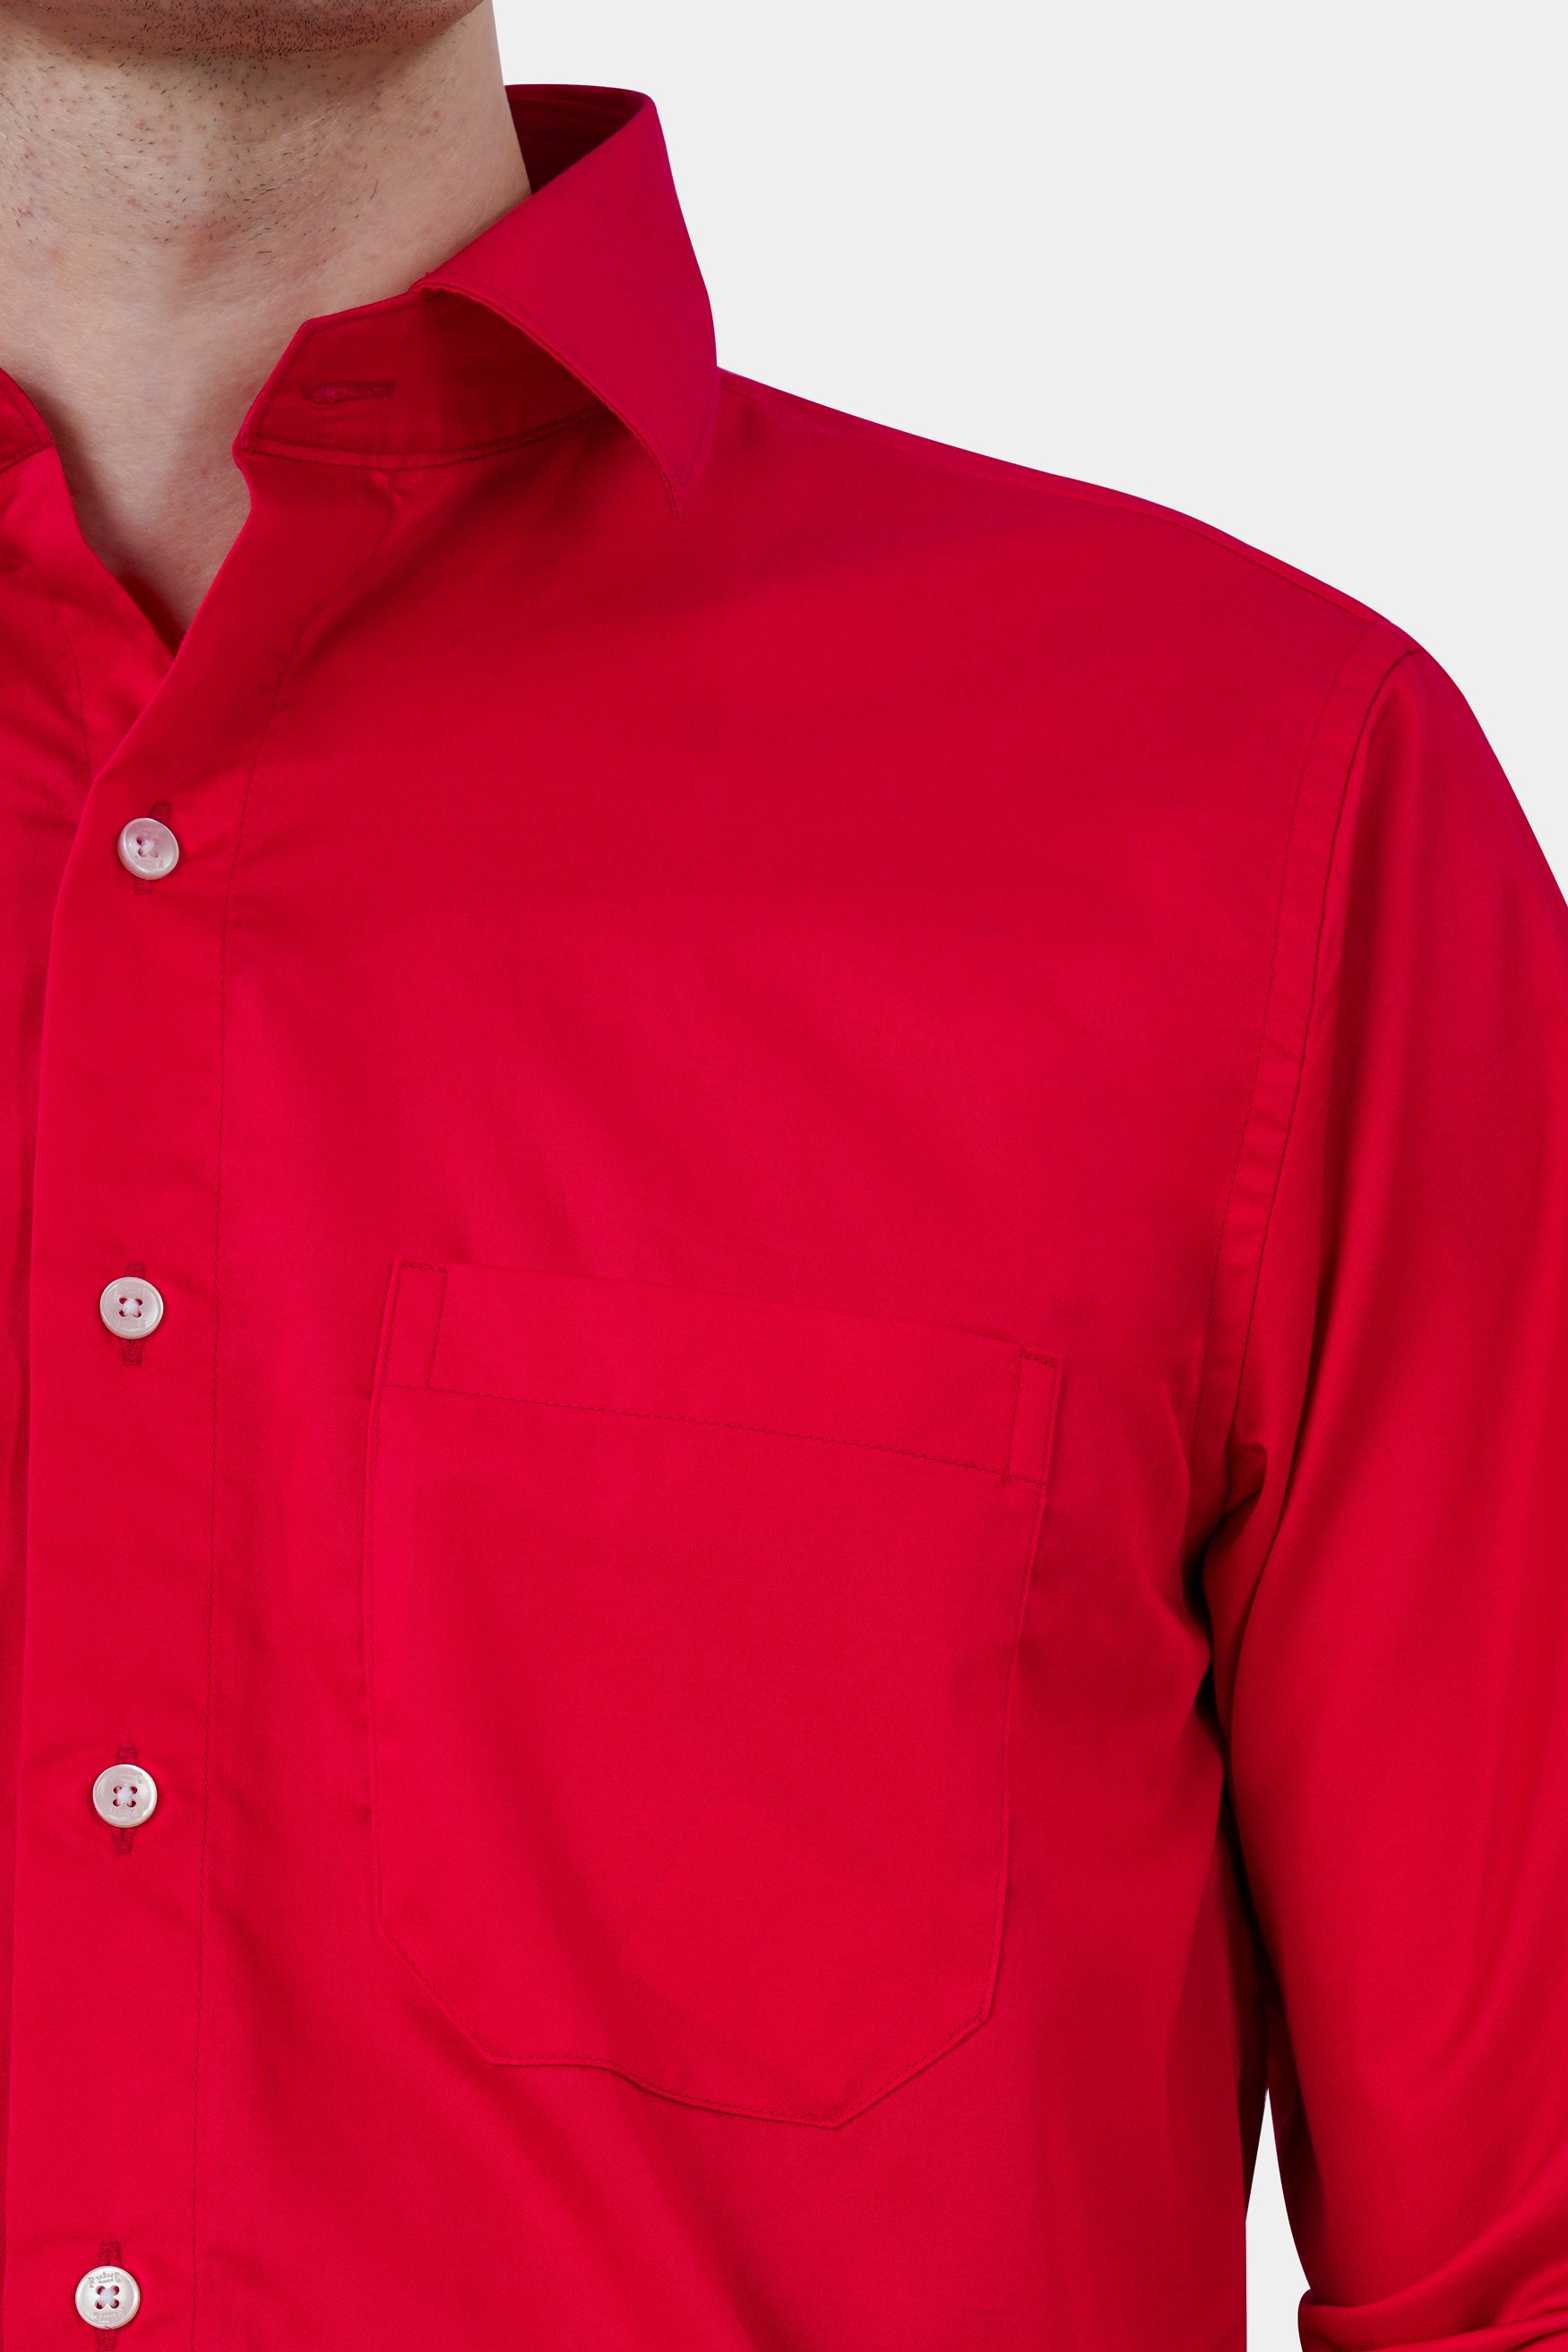 Cardinal Red Subtle Sheen Super Soft Premium Cotton Shirt 11750-38, 11750-H-38, 11750-39, 11750-H-39, 11750-40, 11750-H-40, 11750-42, 11750-H-42, 11750-44, 11750-H-44, 11750-46, 11750-H-46, 11750-48, 11750-H-48, 11750-50, 11750-H-50, 11750-52, 11750-H-52